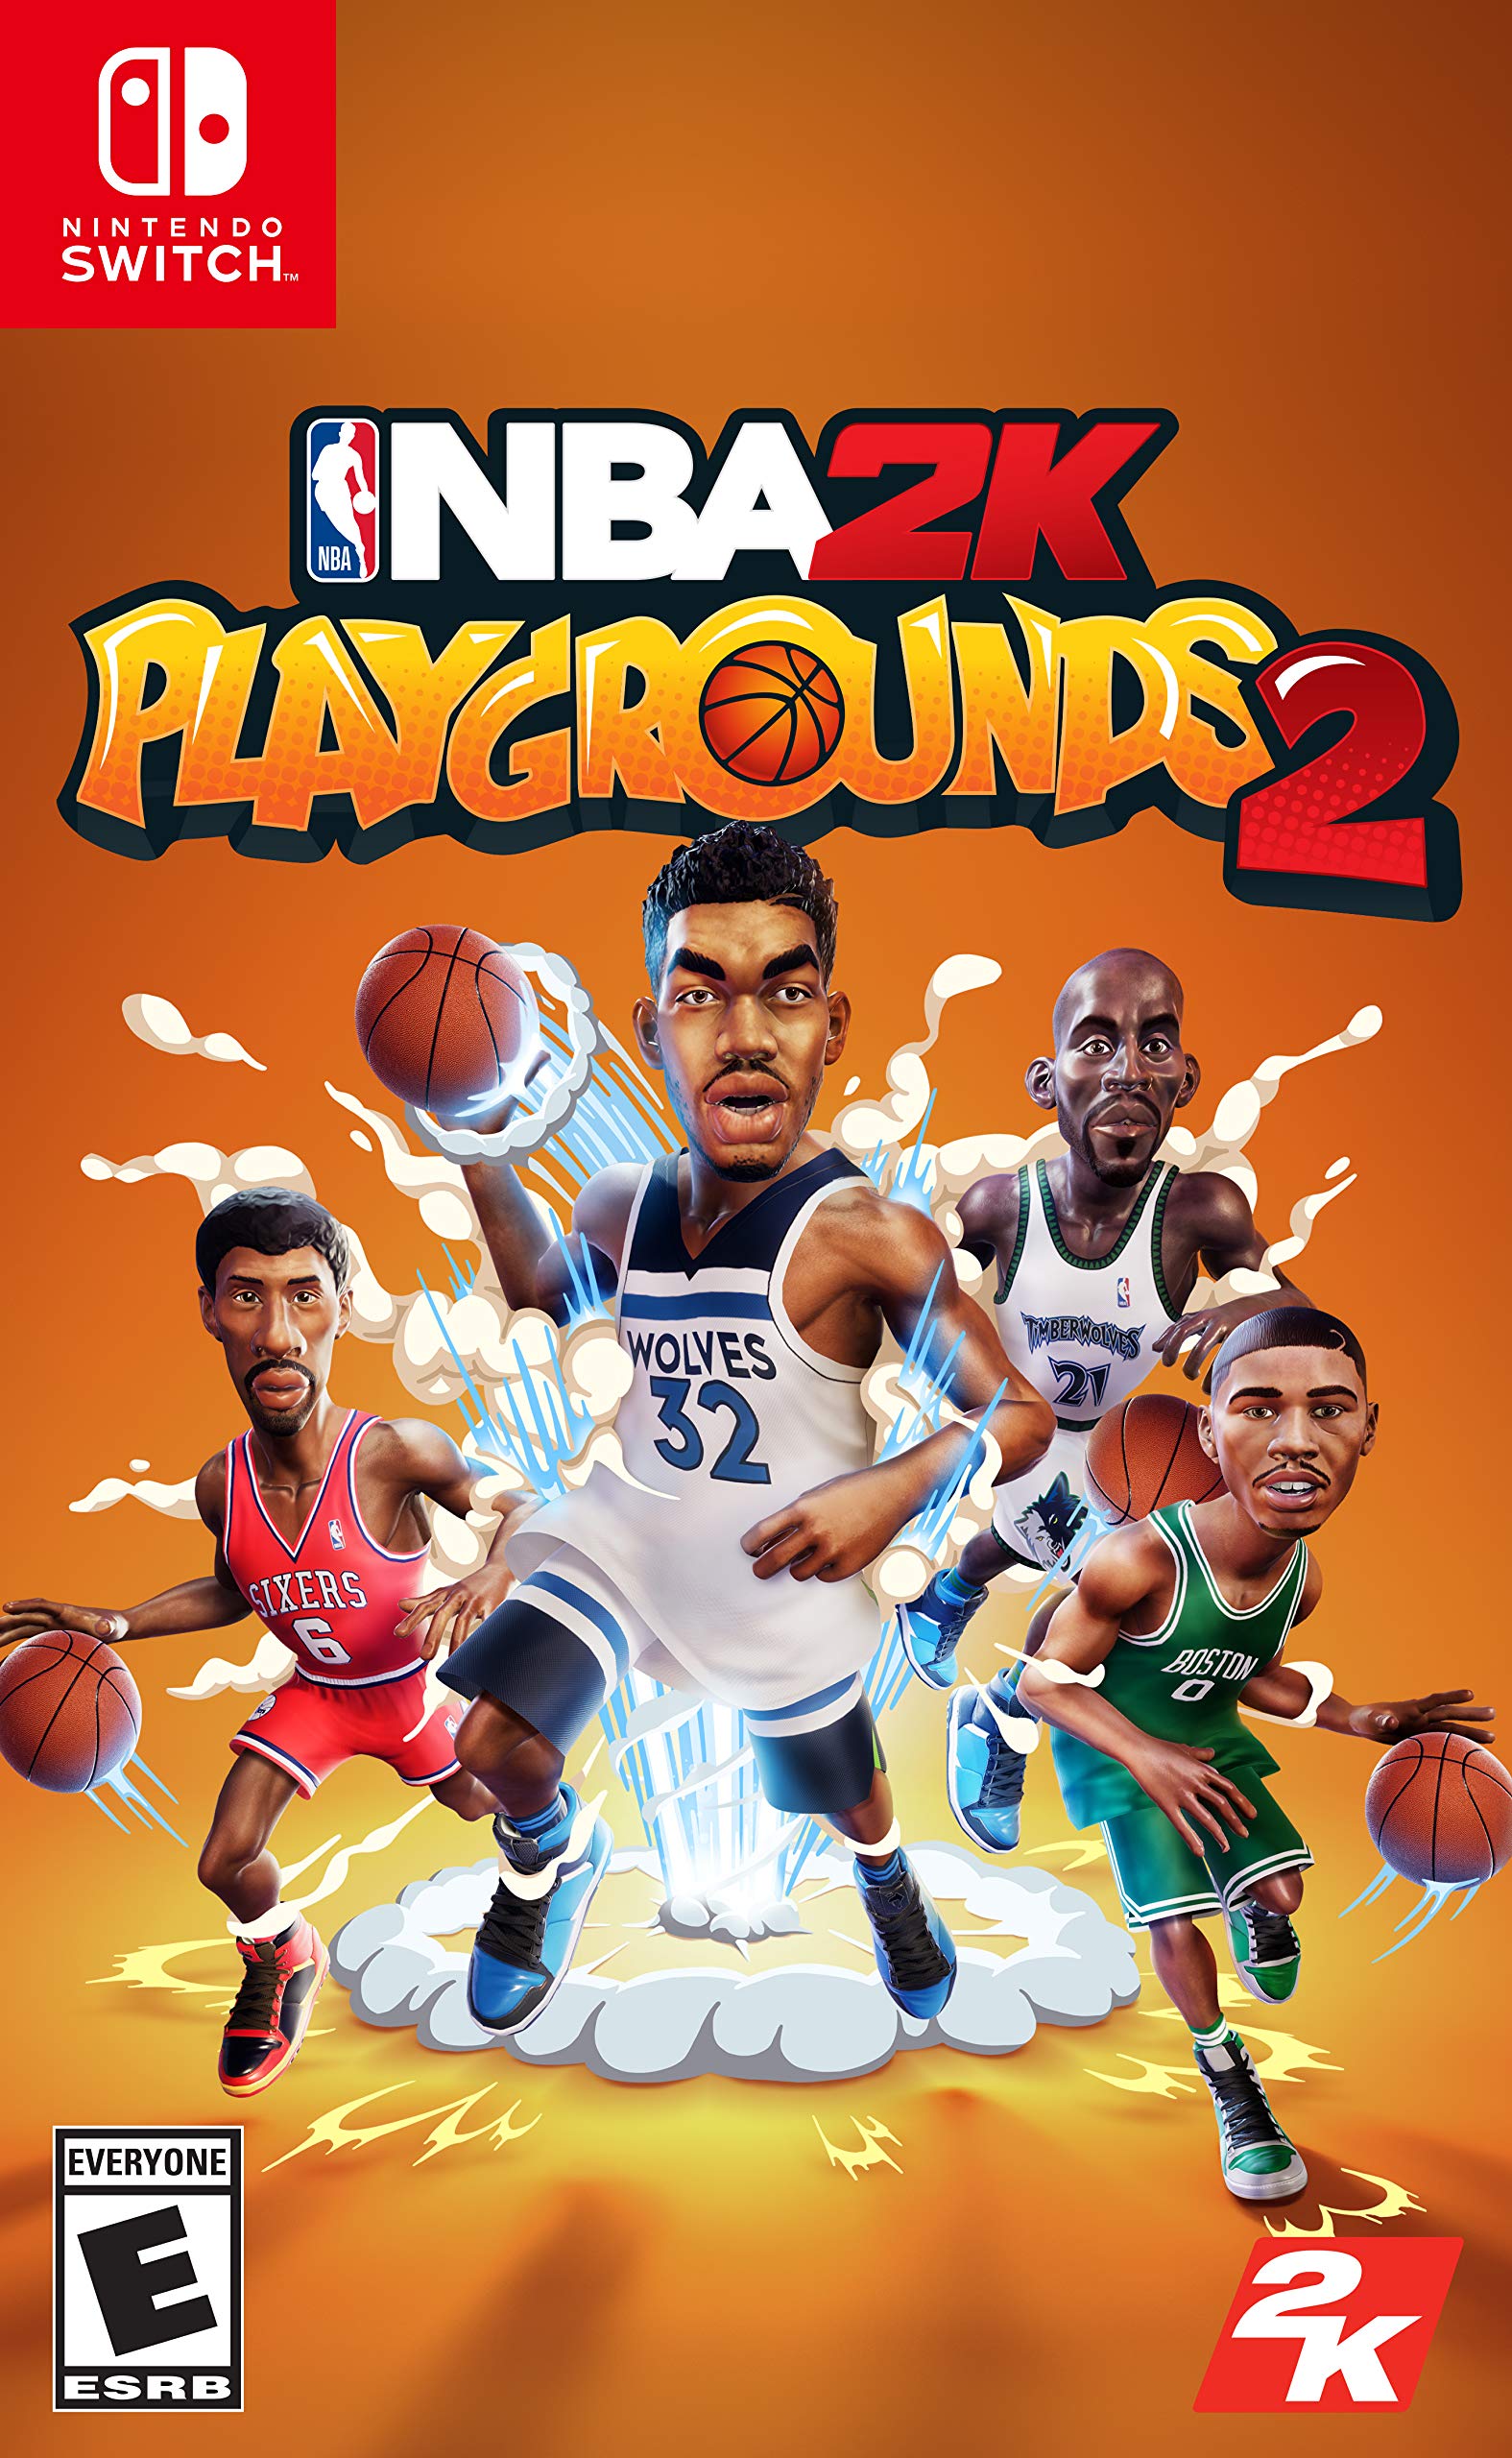 NBA 2K Playgrounds 2 - Nintendo Switch - image 1 of 3